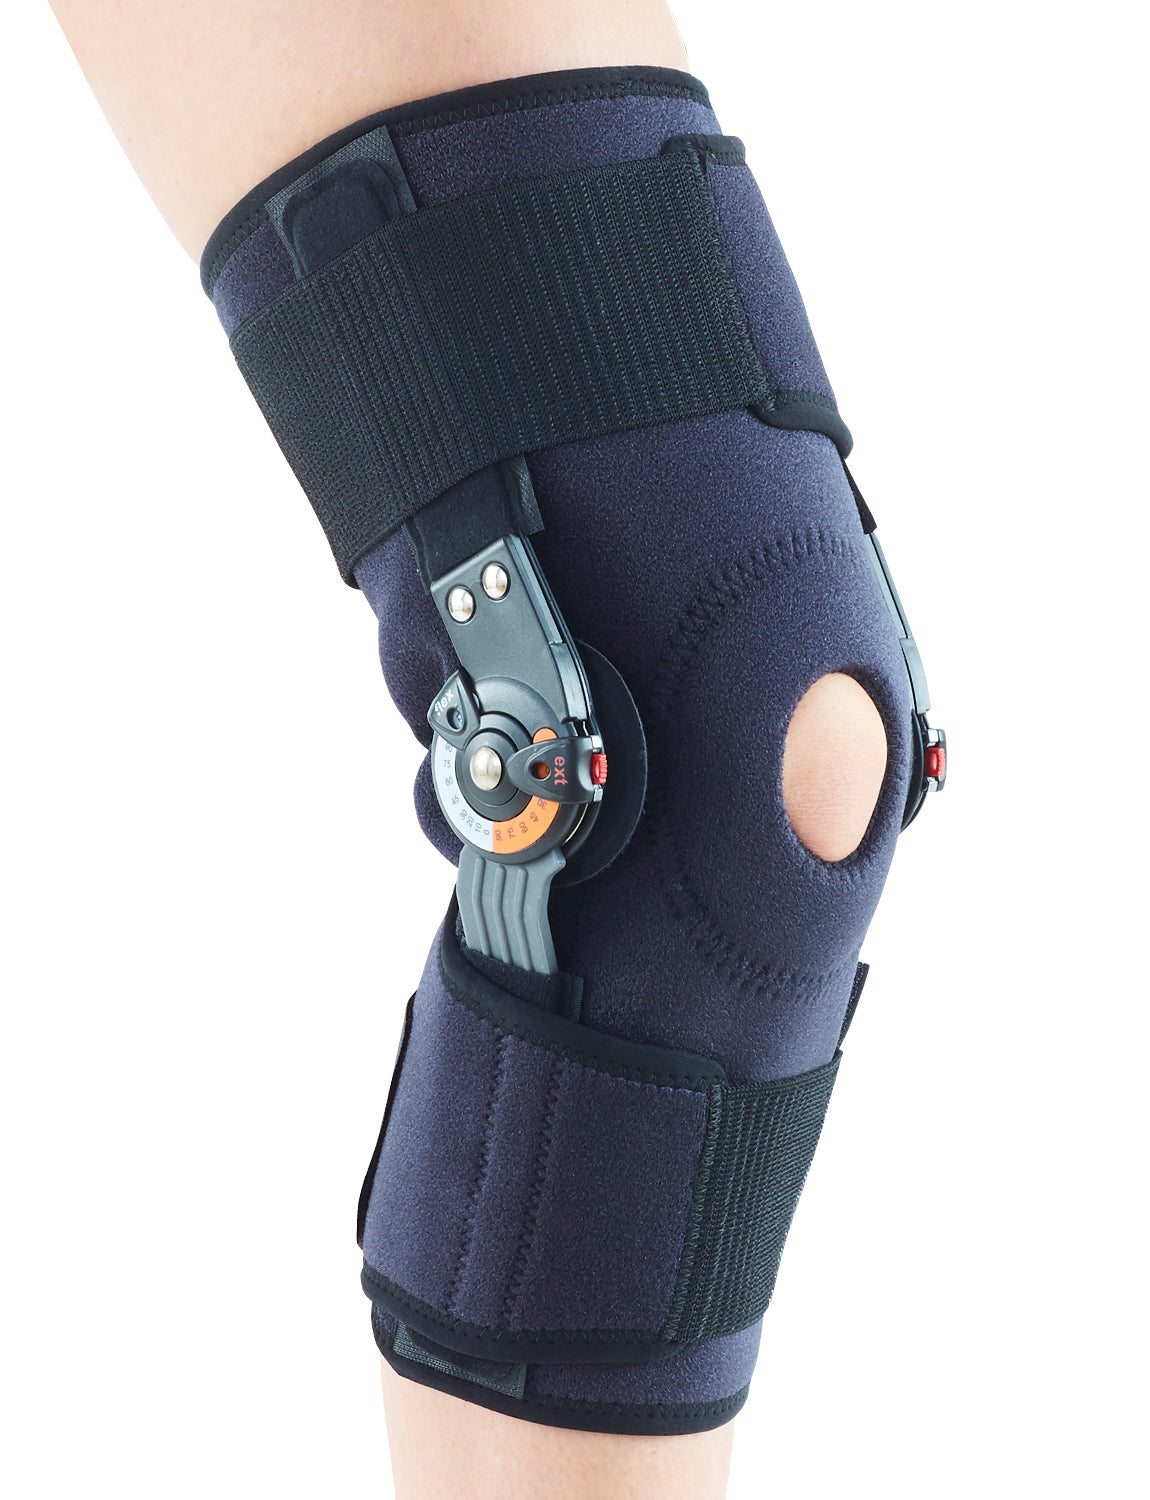 Pin on hinged knee brace